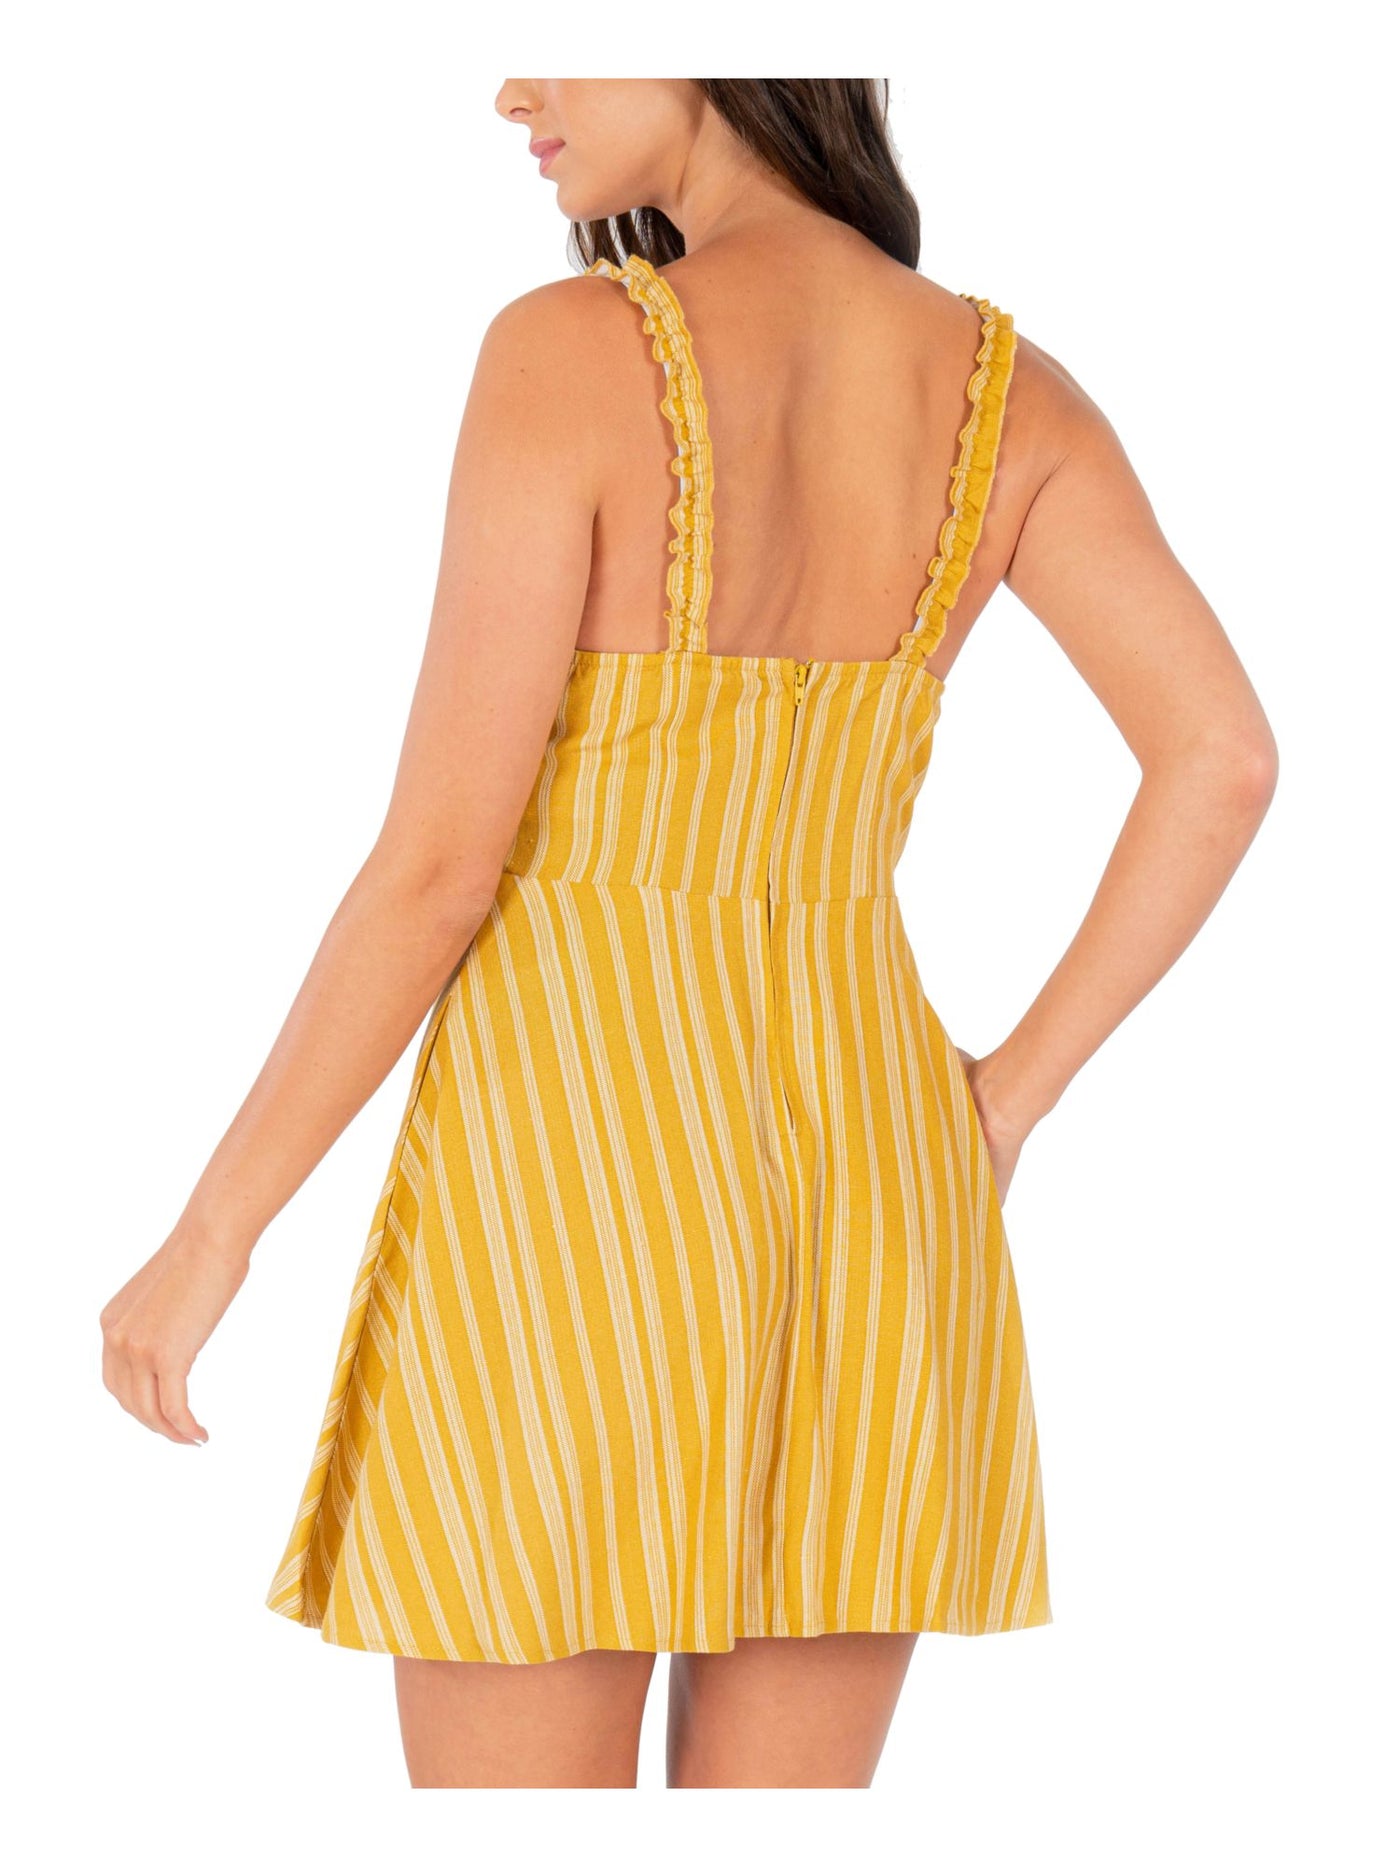 SPEECHLESS Womens Yellow Stretch Ruffled Tie Striped Sleeveless Scoop Neck Mini Fit + Flare Dress Juniors XS